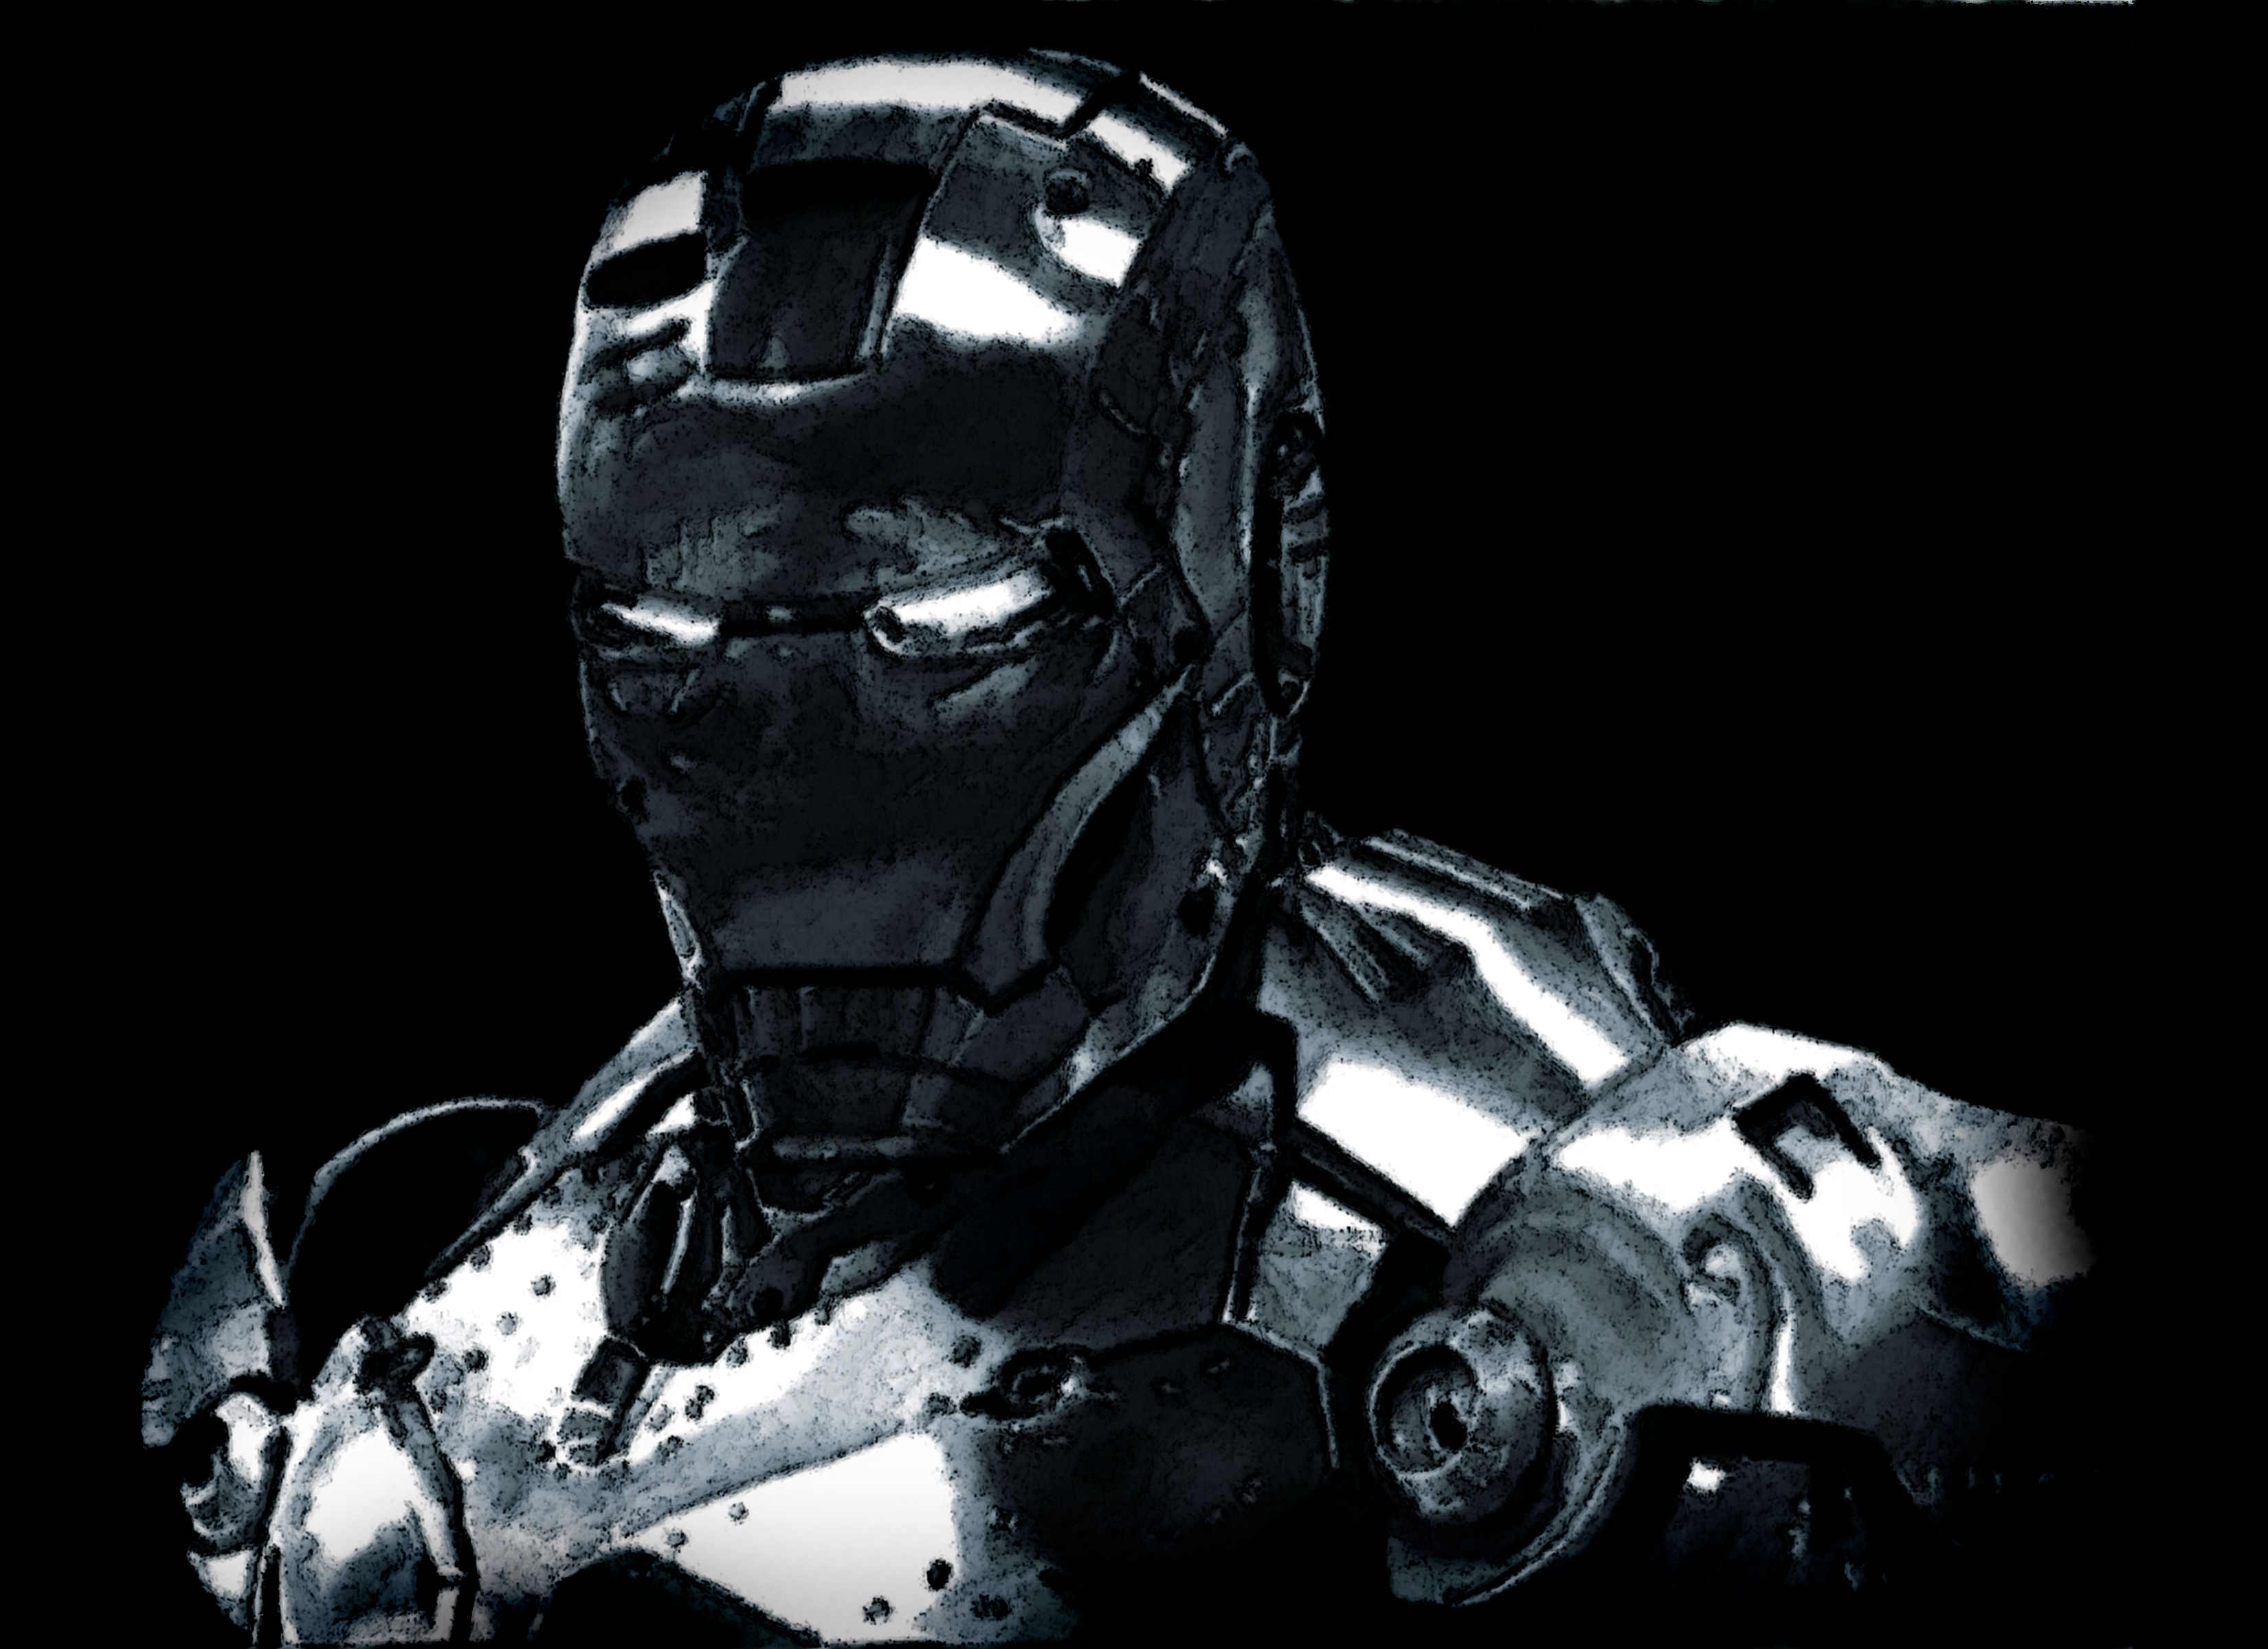 Iron Man, movies - desktop wallpaper